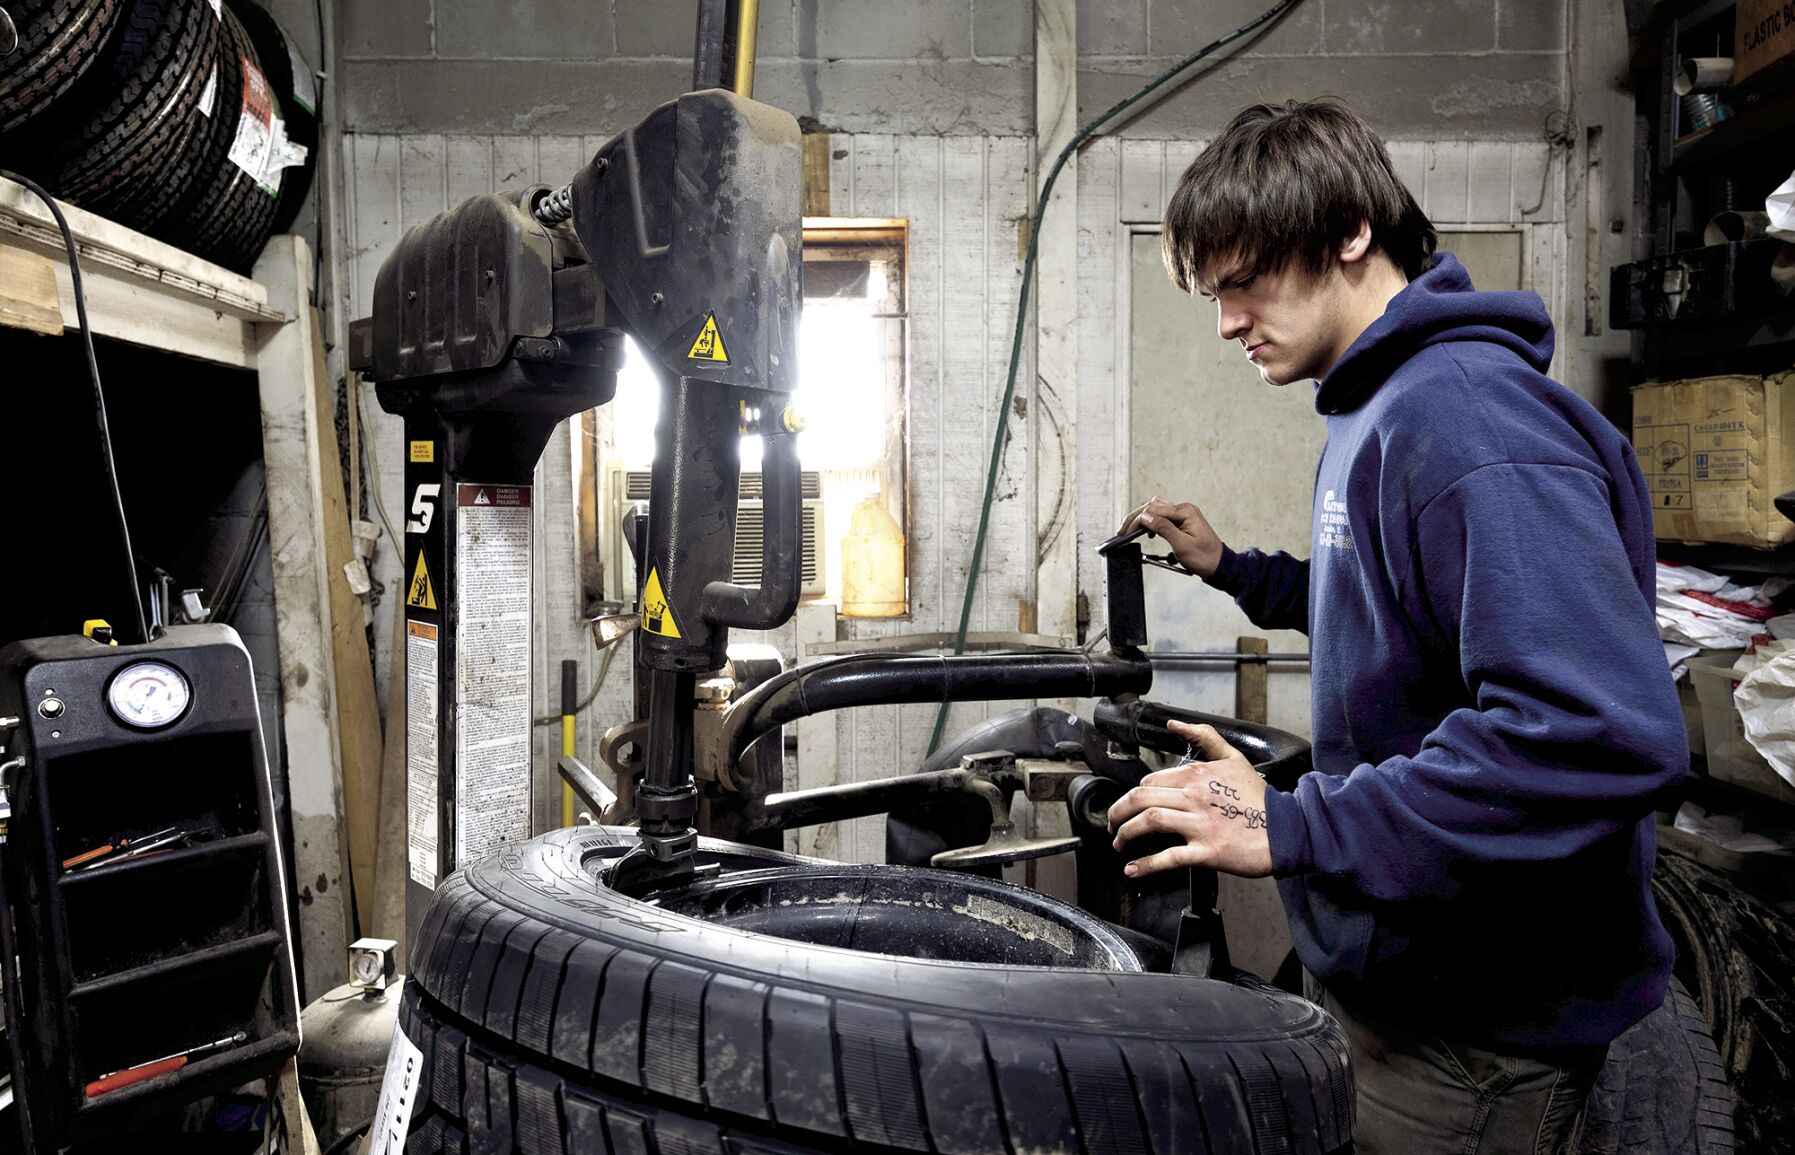 Owner Jack Kremer works on a tire at Kremer Tire & Auto in La Motte, Iowa, on Thursday.    PHOTO CREDIT: Stephen Gassman